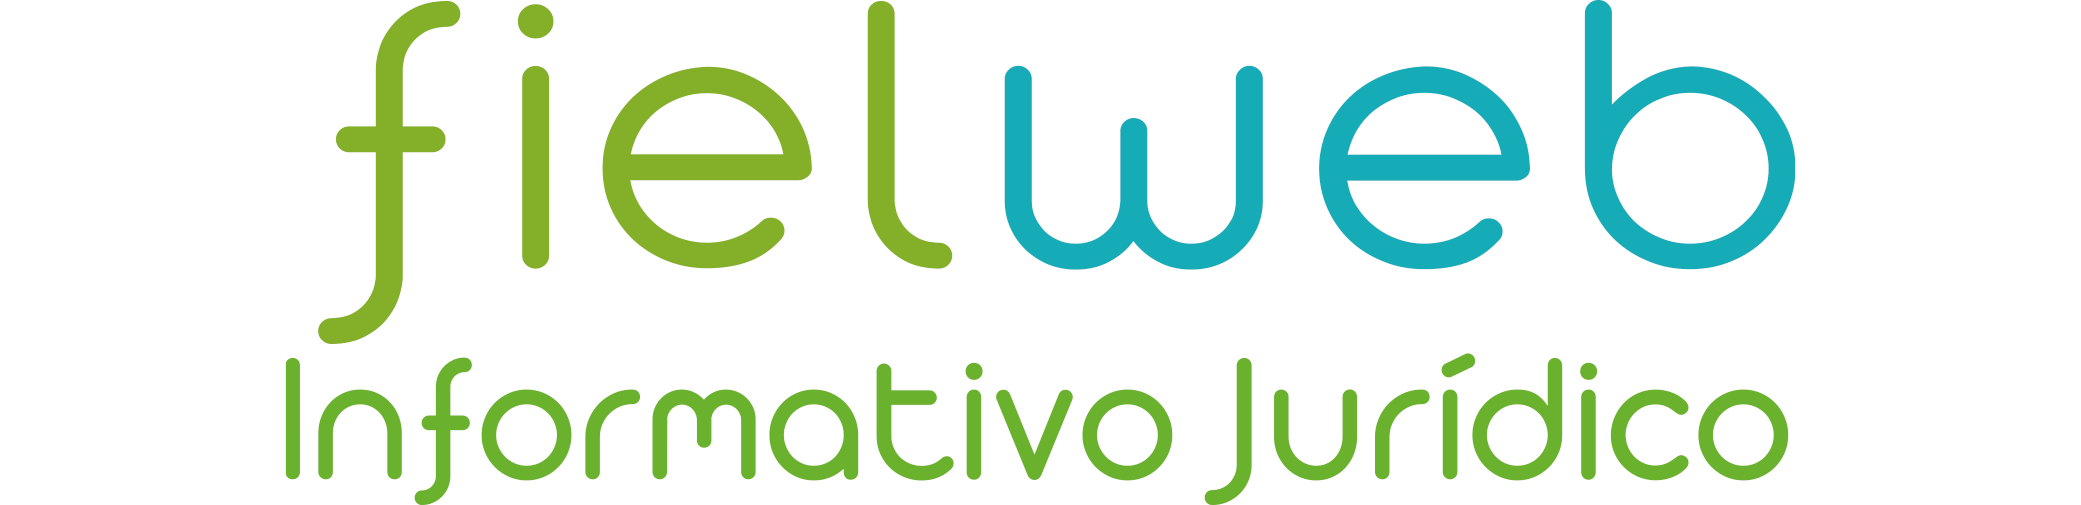 Informativo jurídico Fiel web plus logo